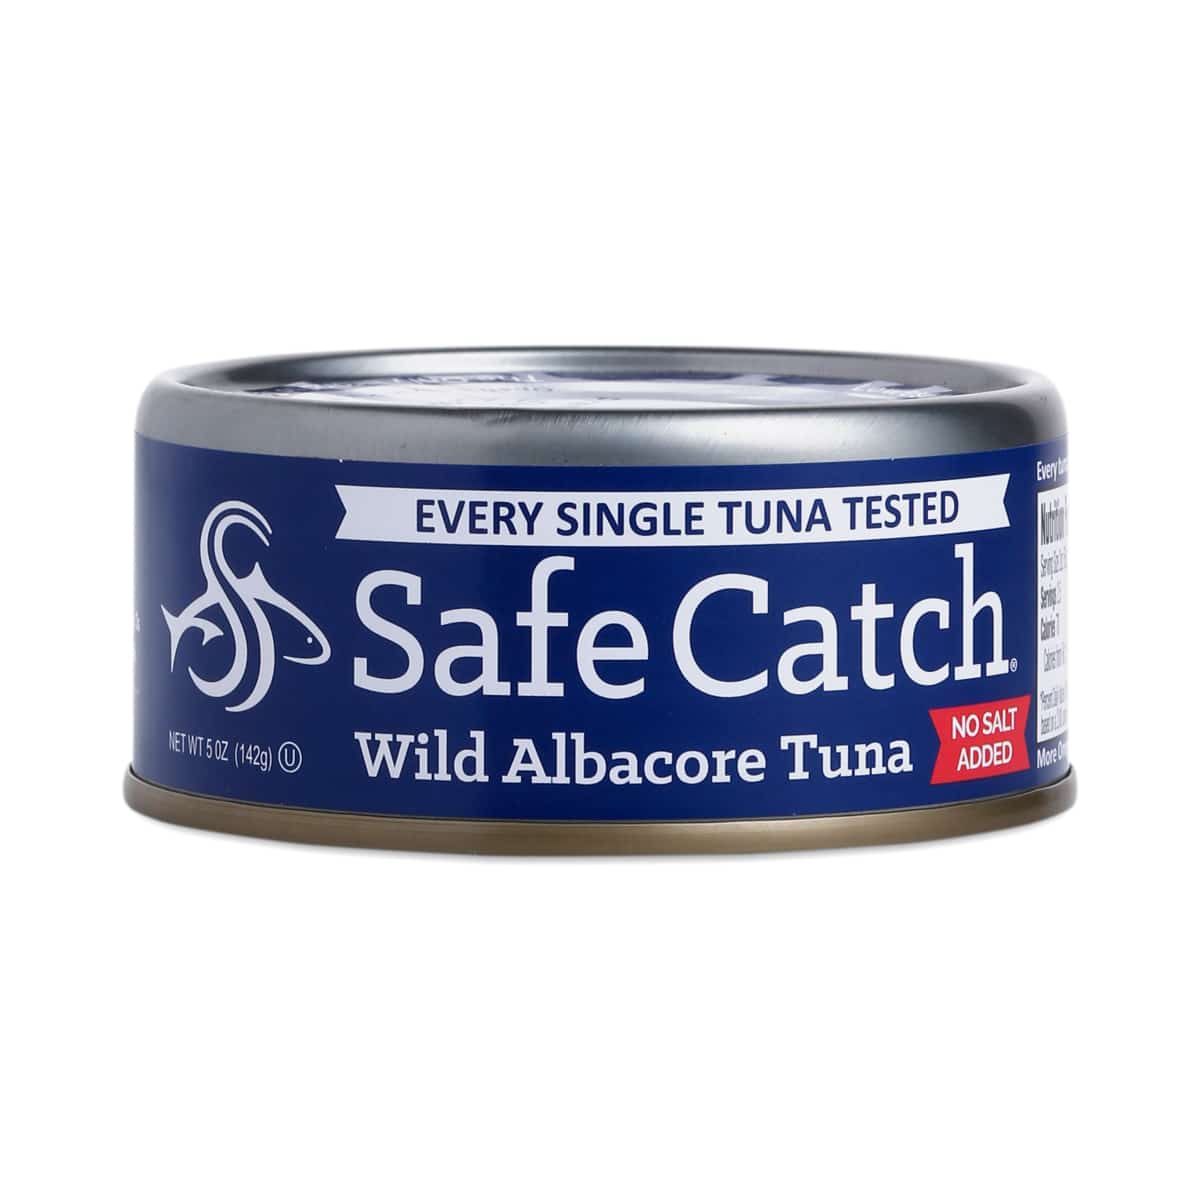 Safe Catch Low Mercury Wild Albacore Tuna No Salt Added (142g) - Lifestyle Markets